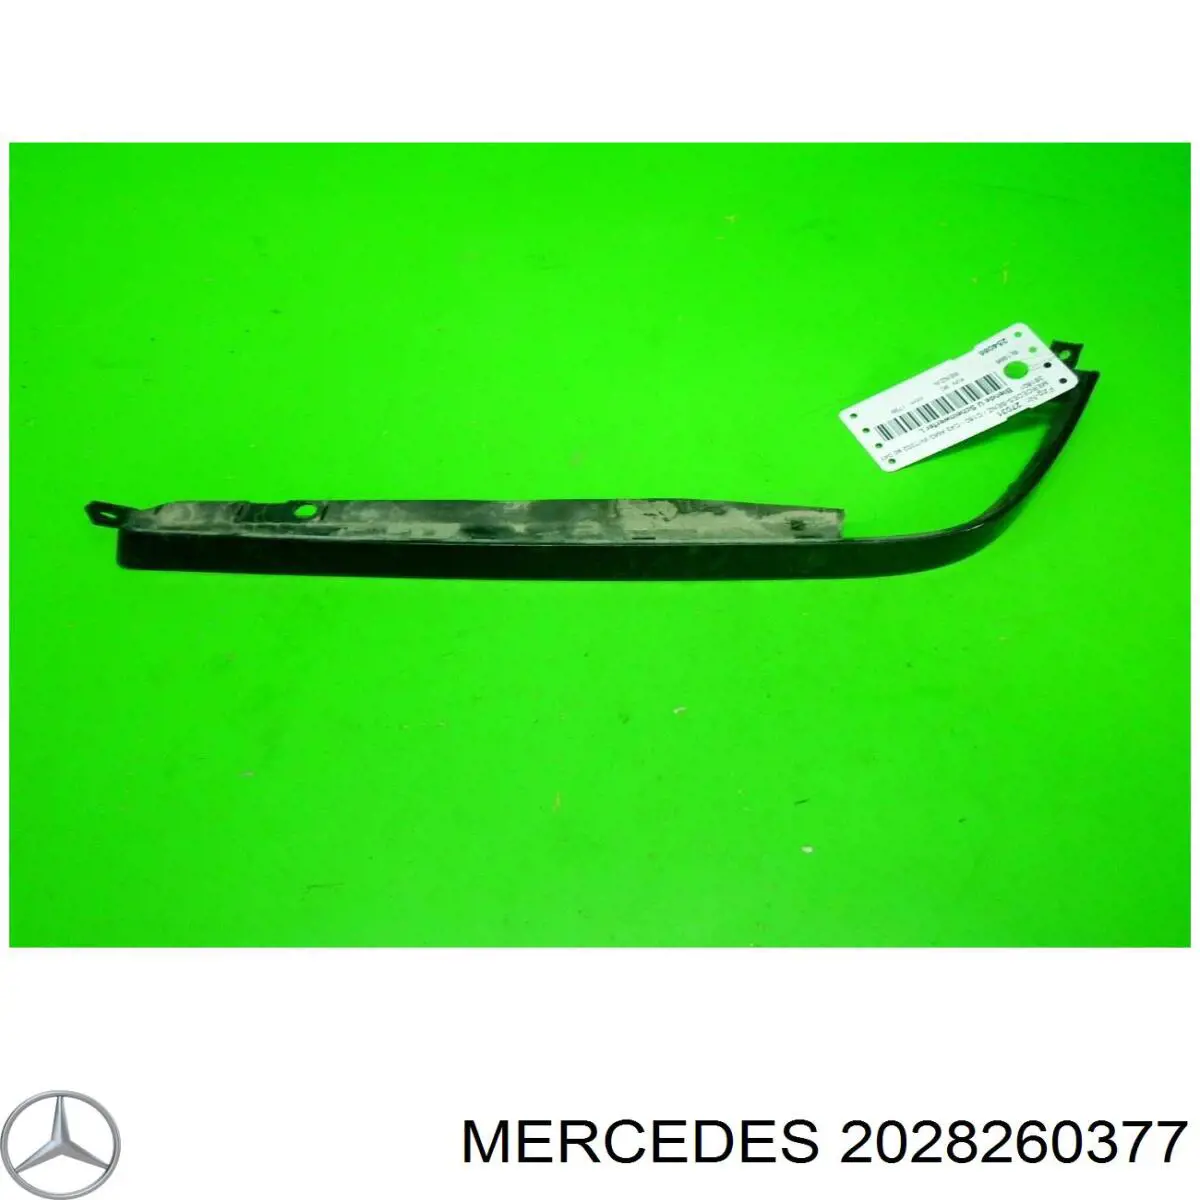 A2028260377 Mercedes ресничка (накладка левой фары)